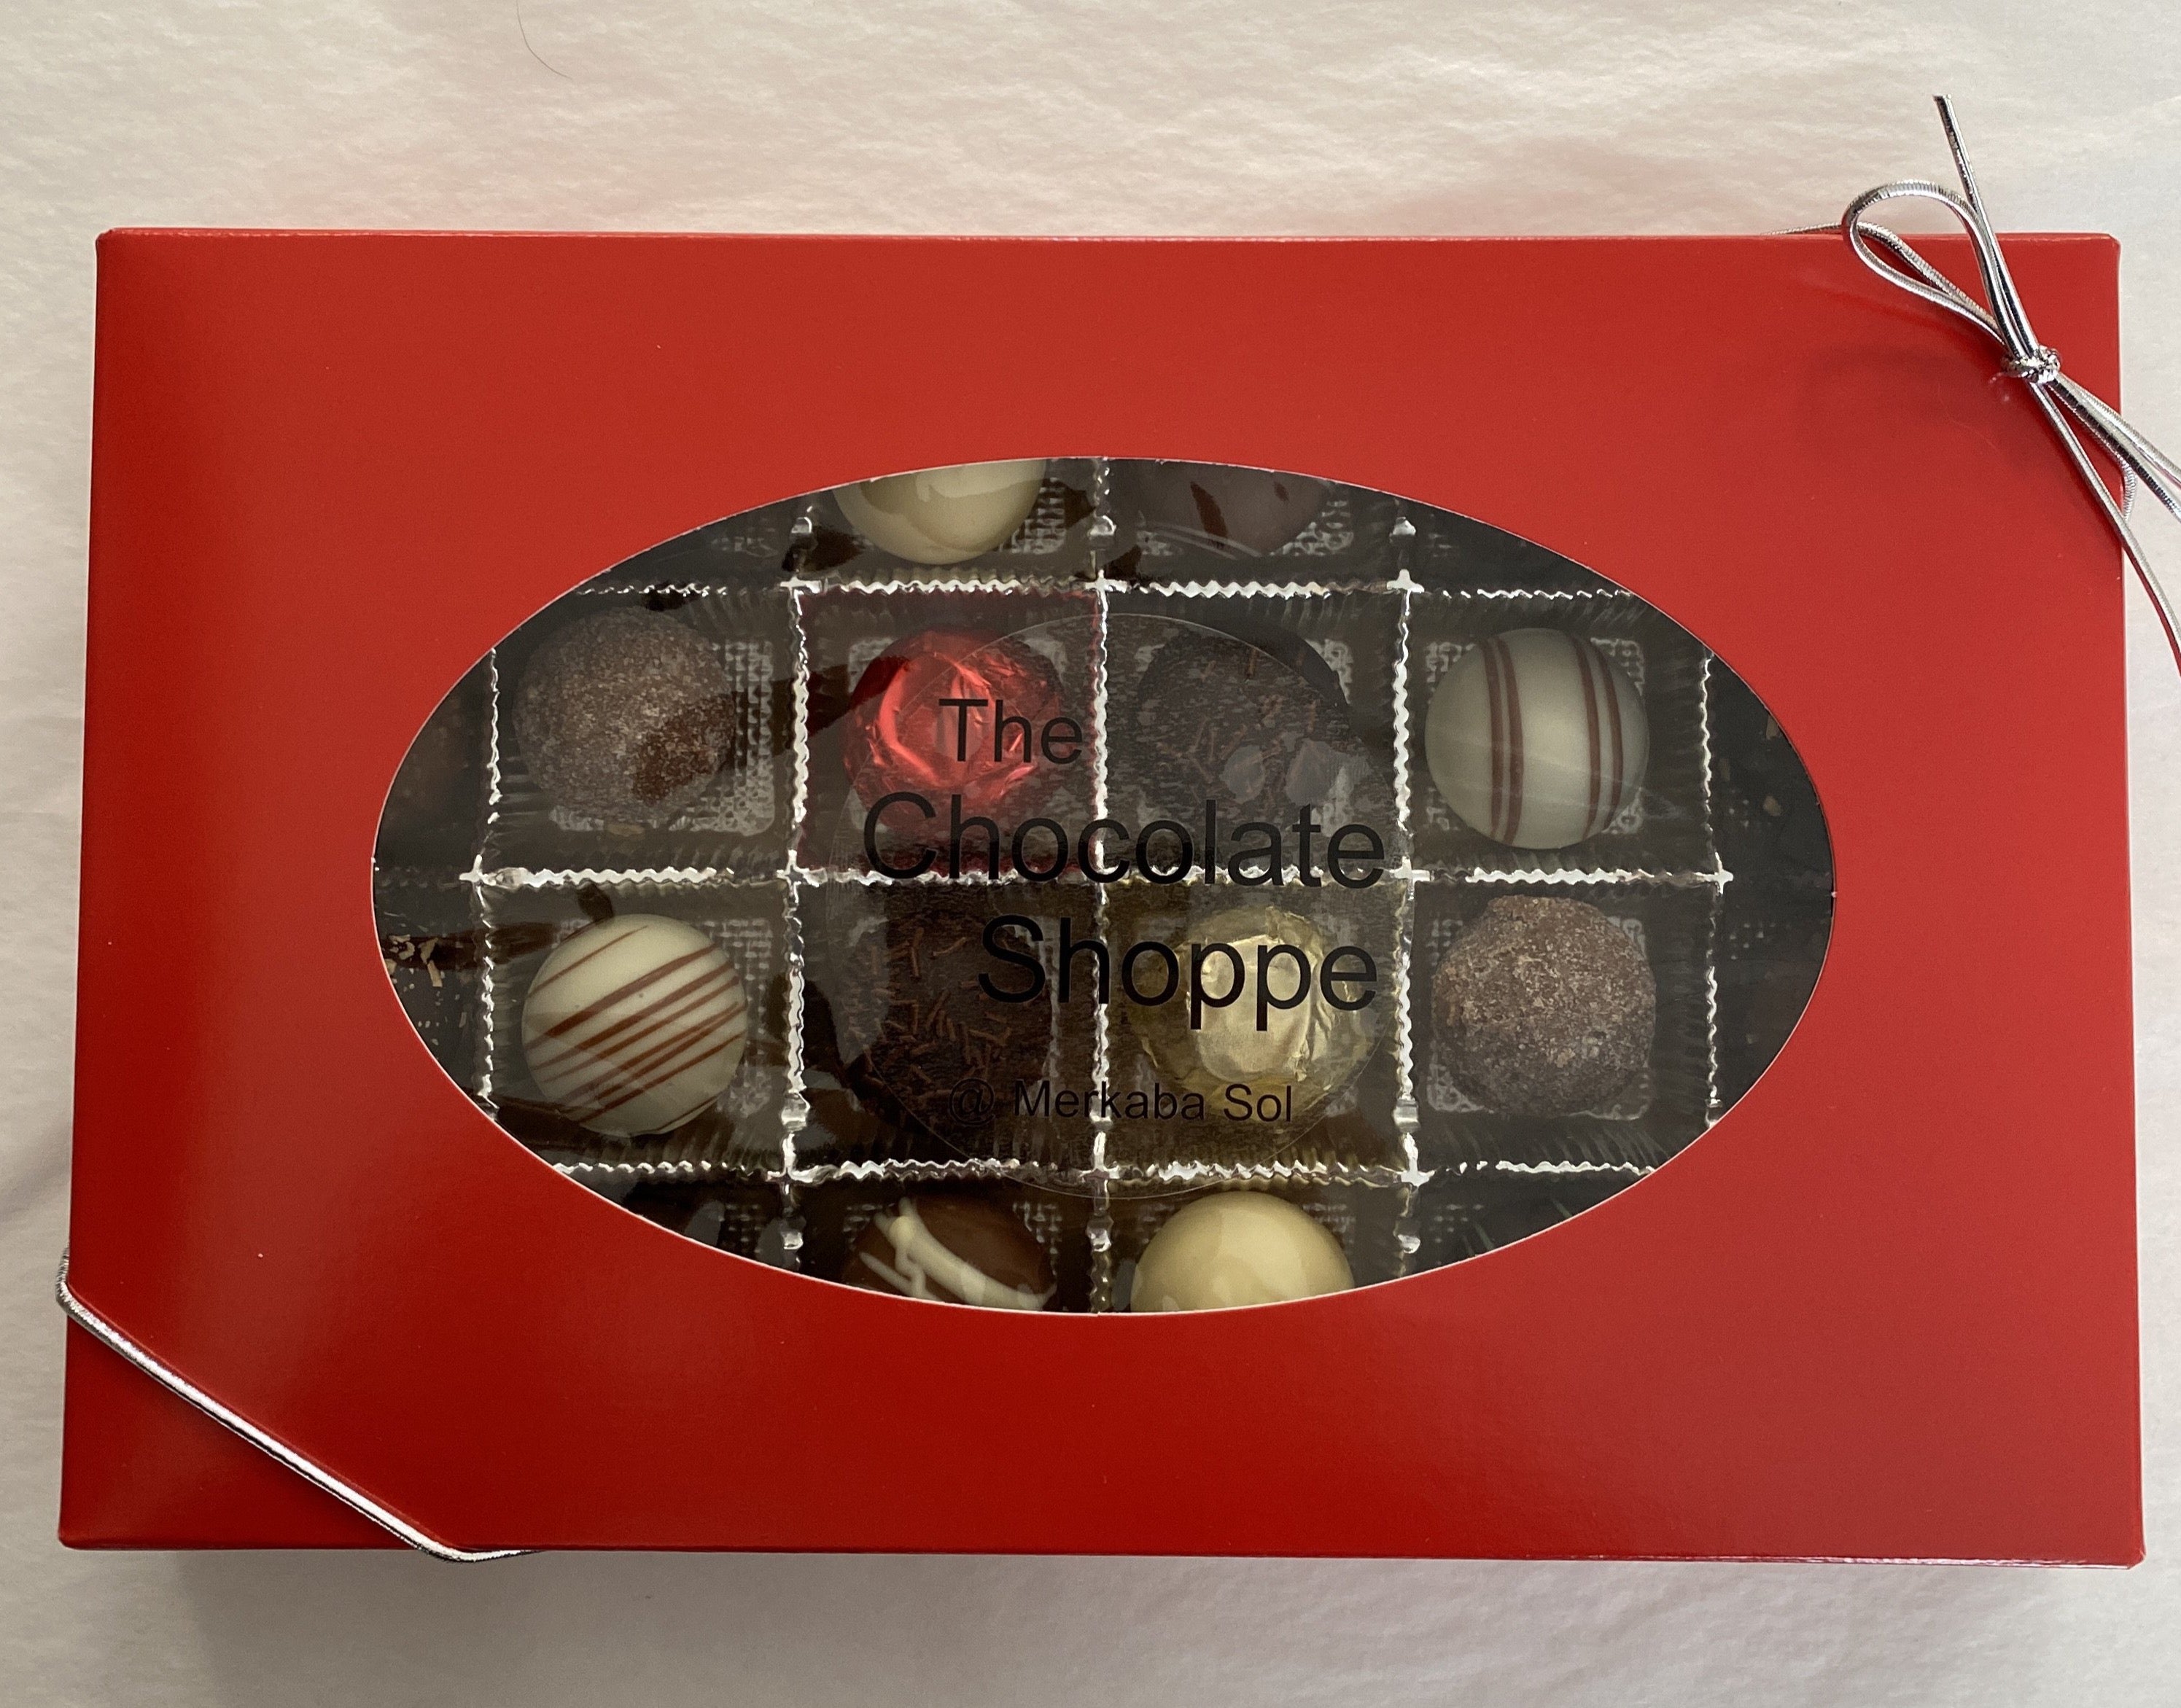 Assorted Box of Chocolates lg